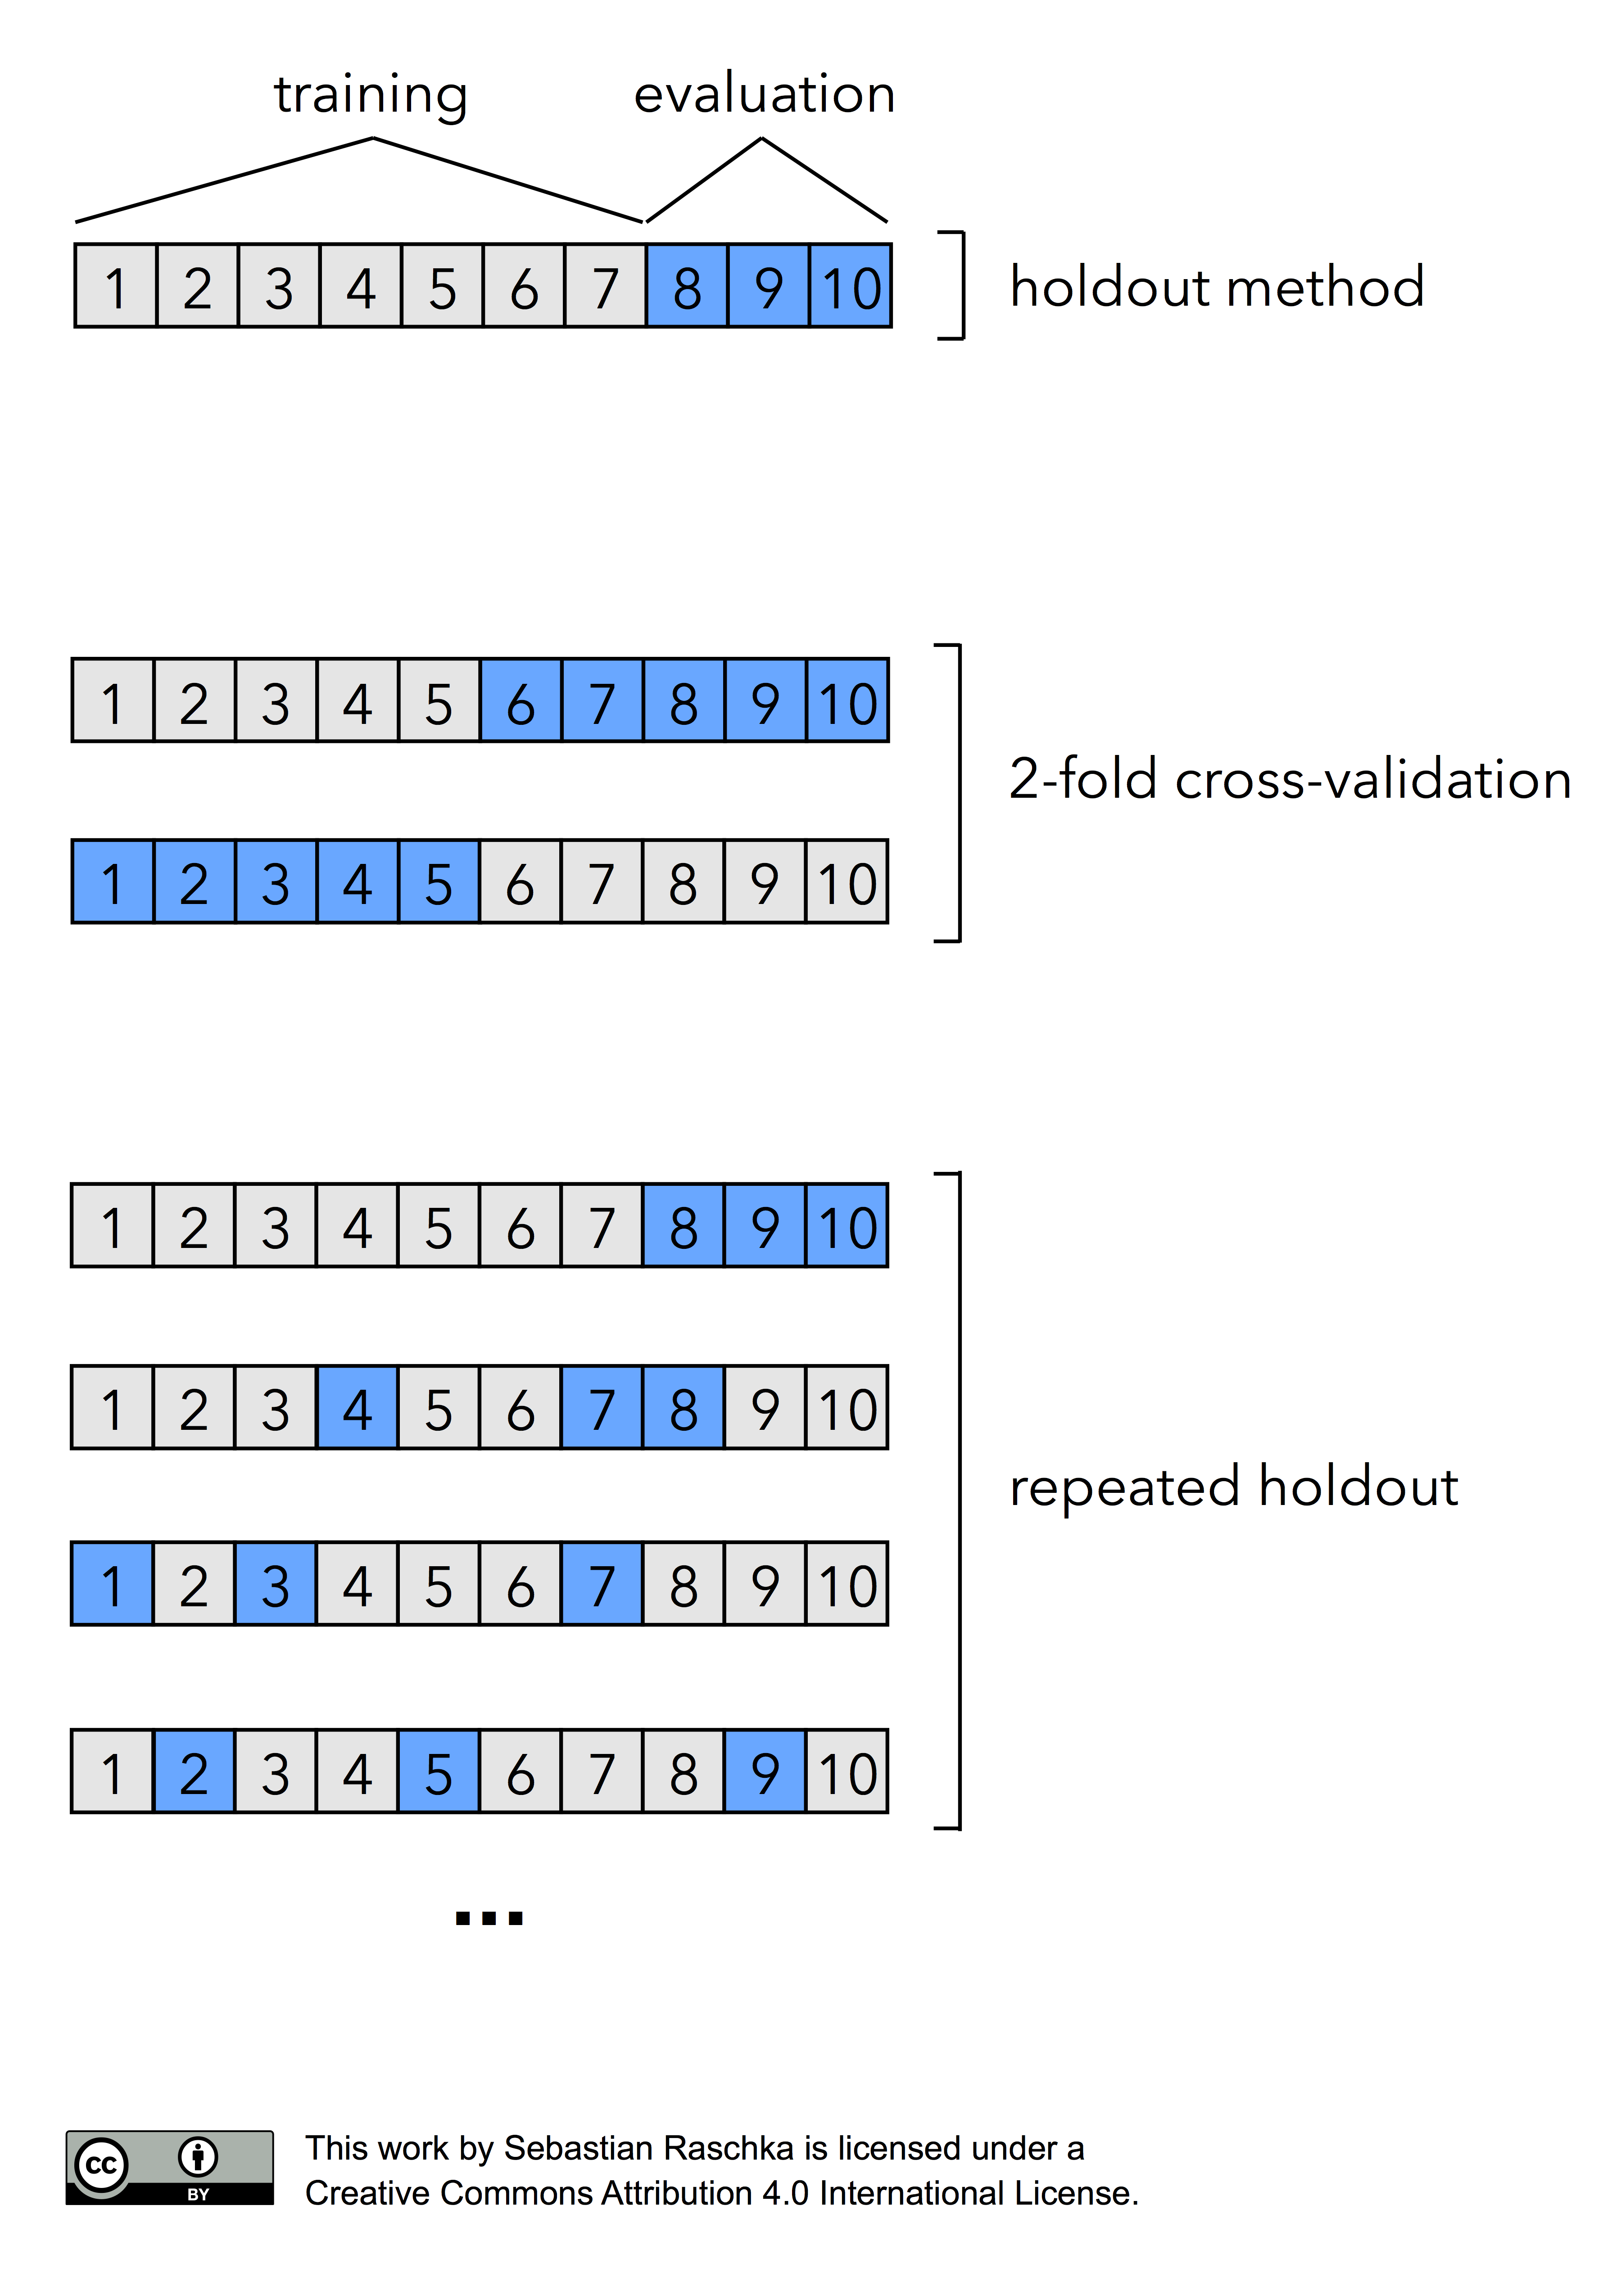 Holdout Method vs 2-Fold cross-validation